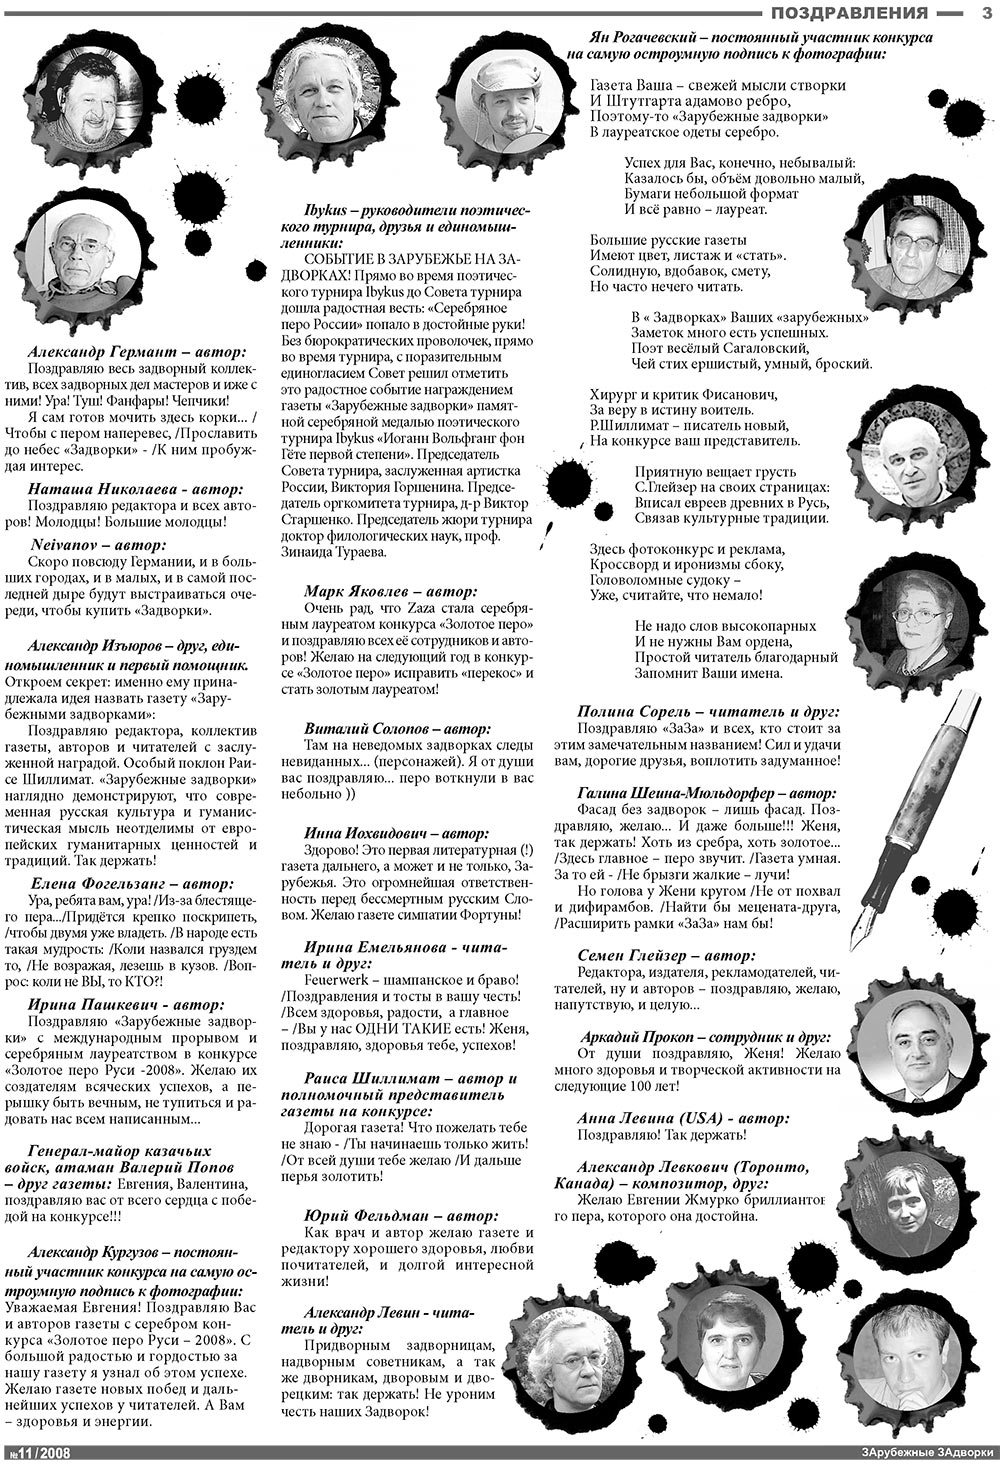 Известия BW (газета). 2008 год, номер 11, стр. 3